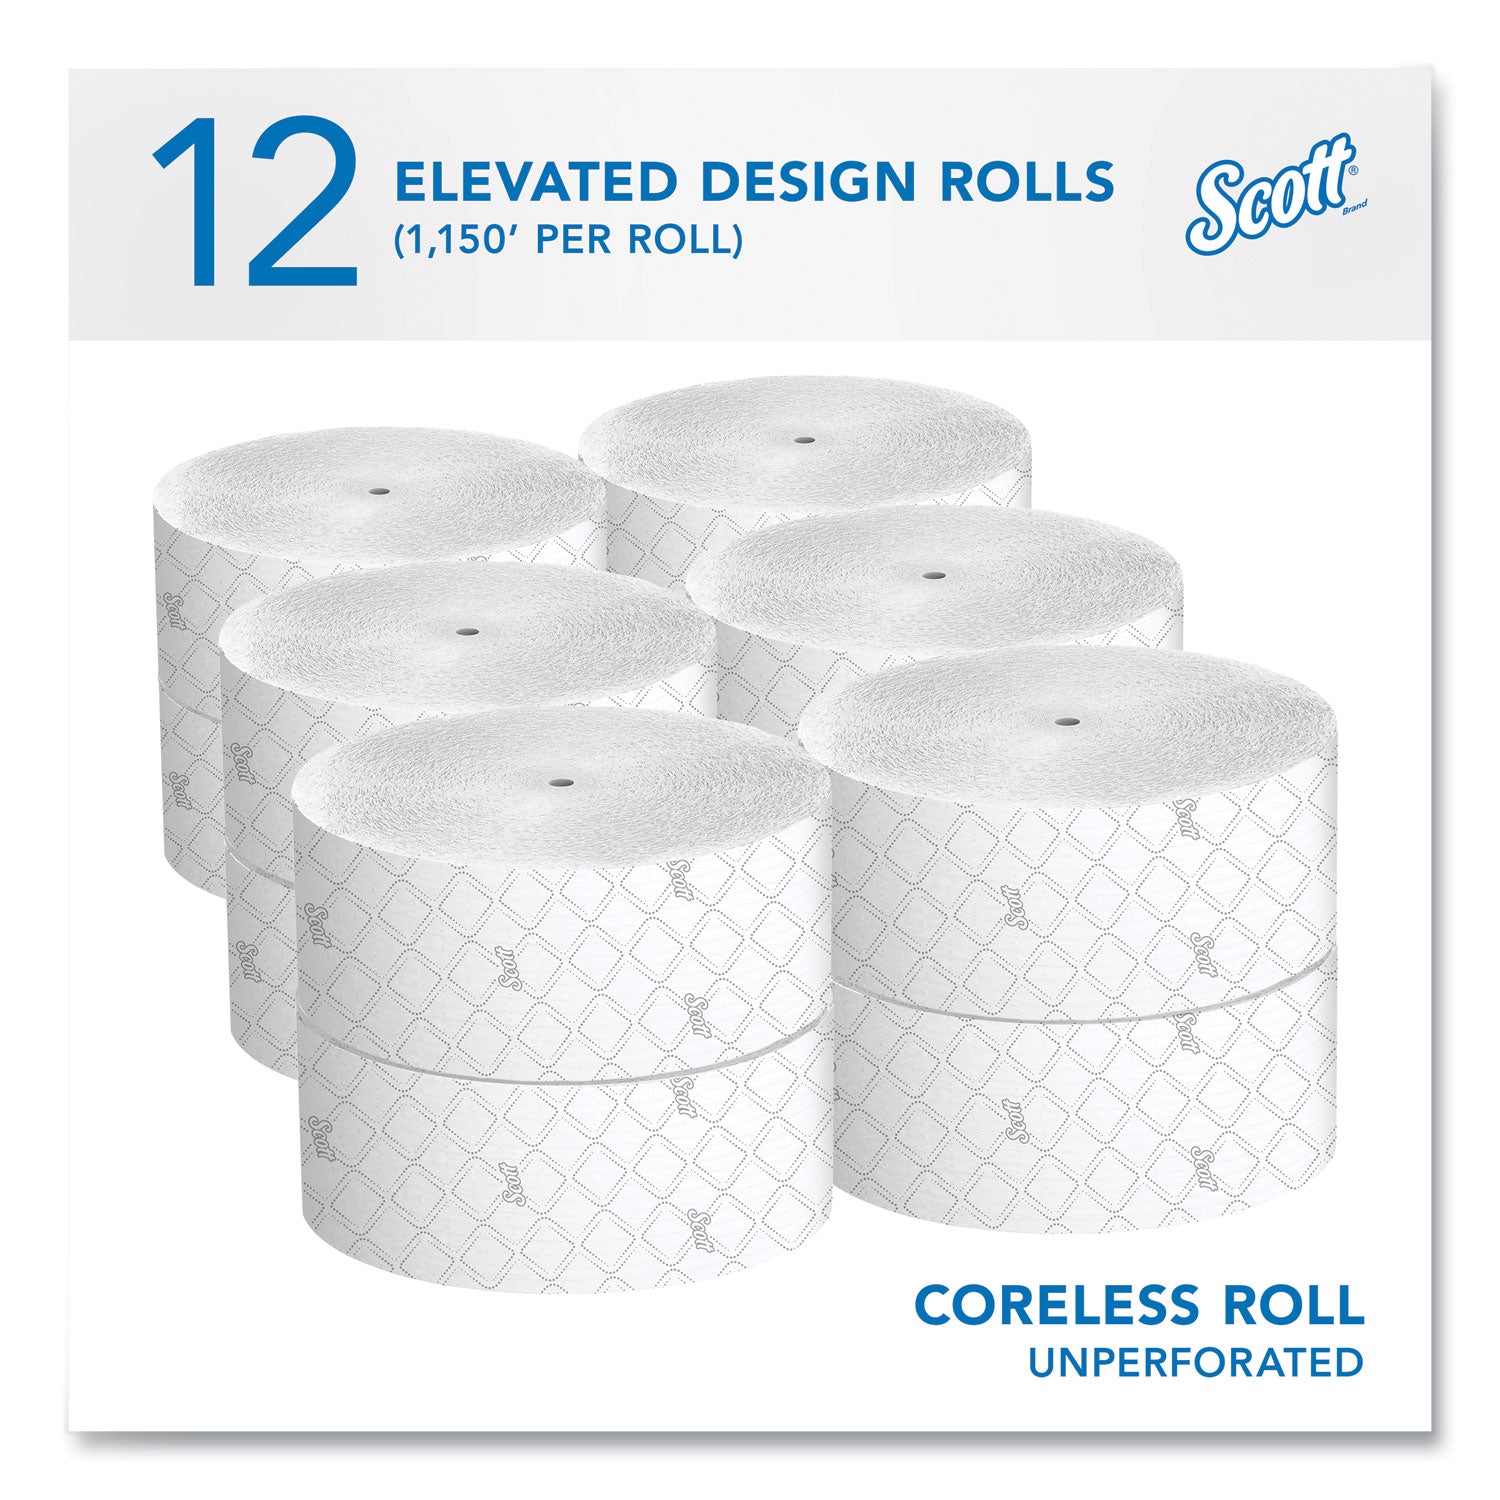 Essential Coreless JRT, Septic Safe, 2-Ply, White, 3.75" x 1,150 ft, 12 Rolls/Carton - 